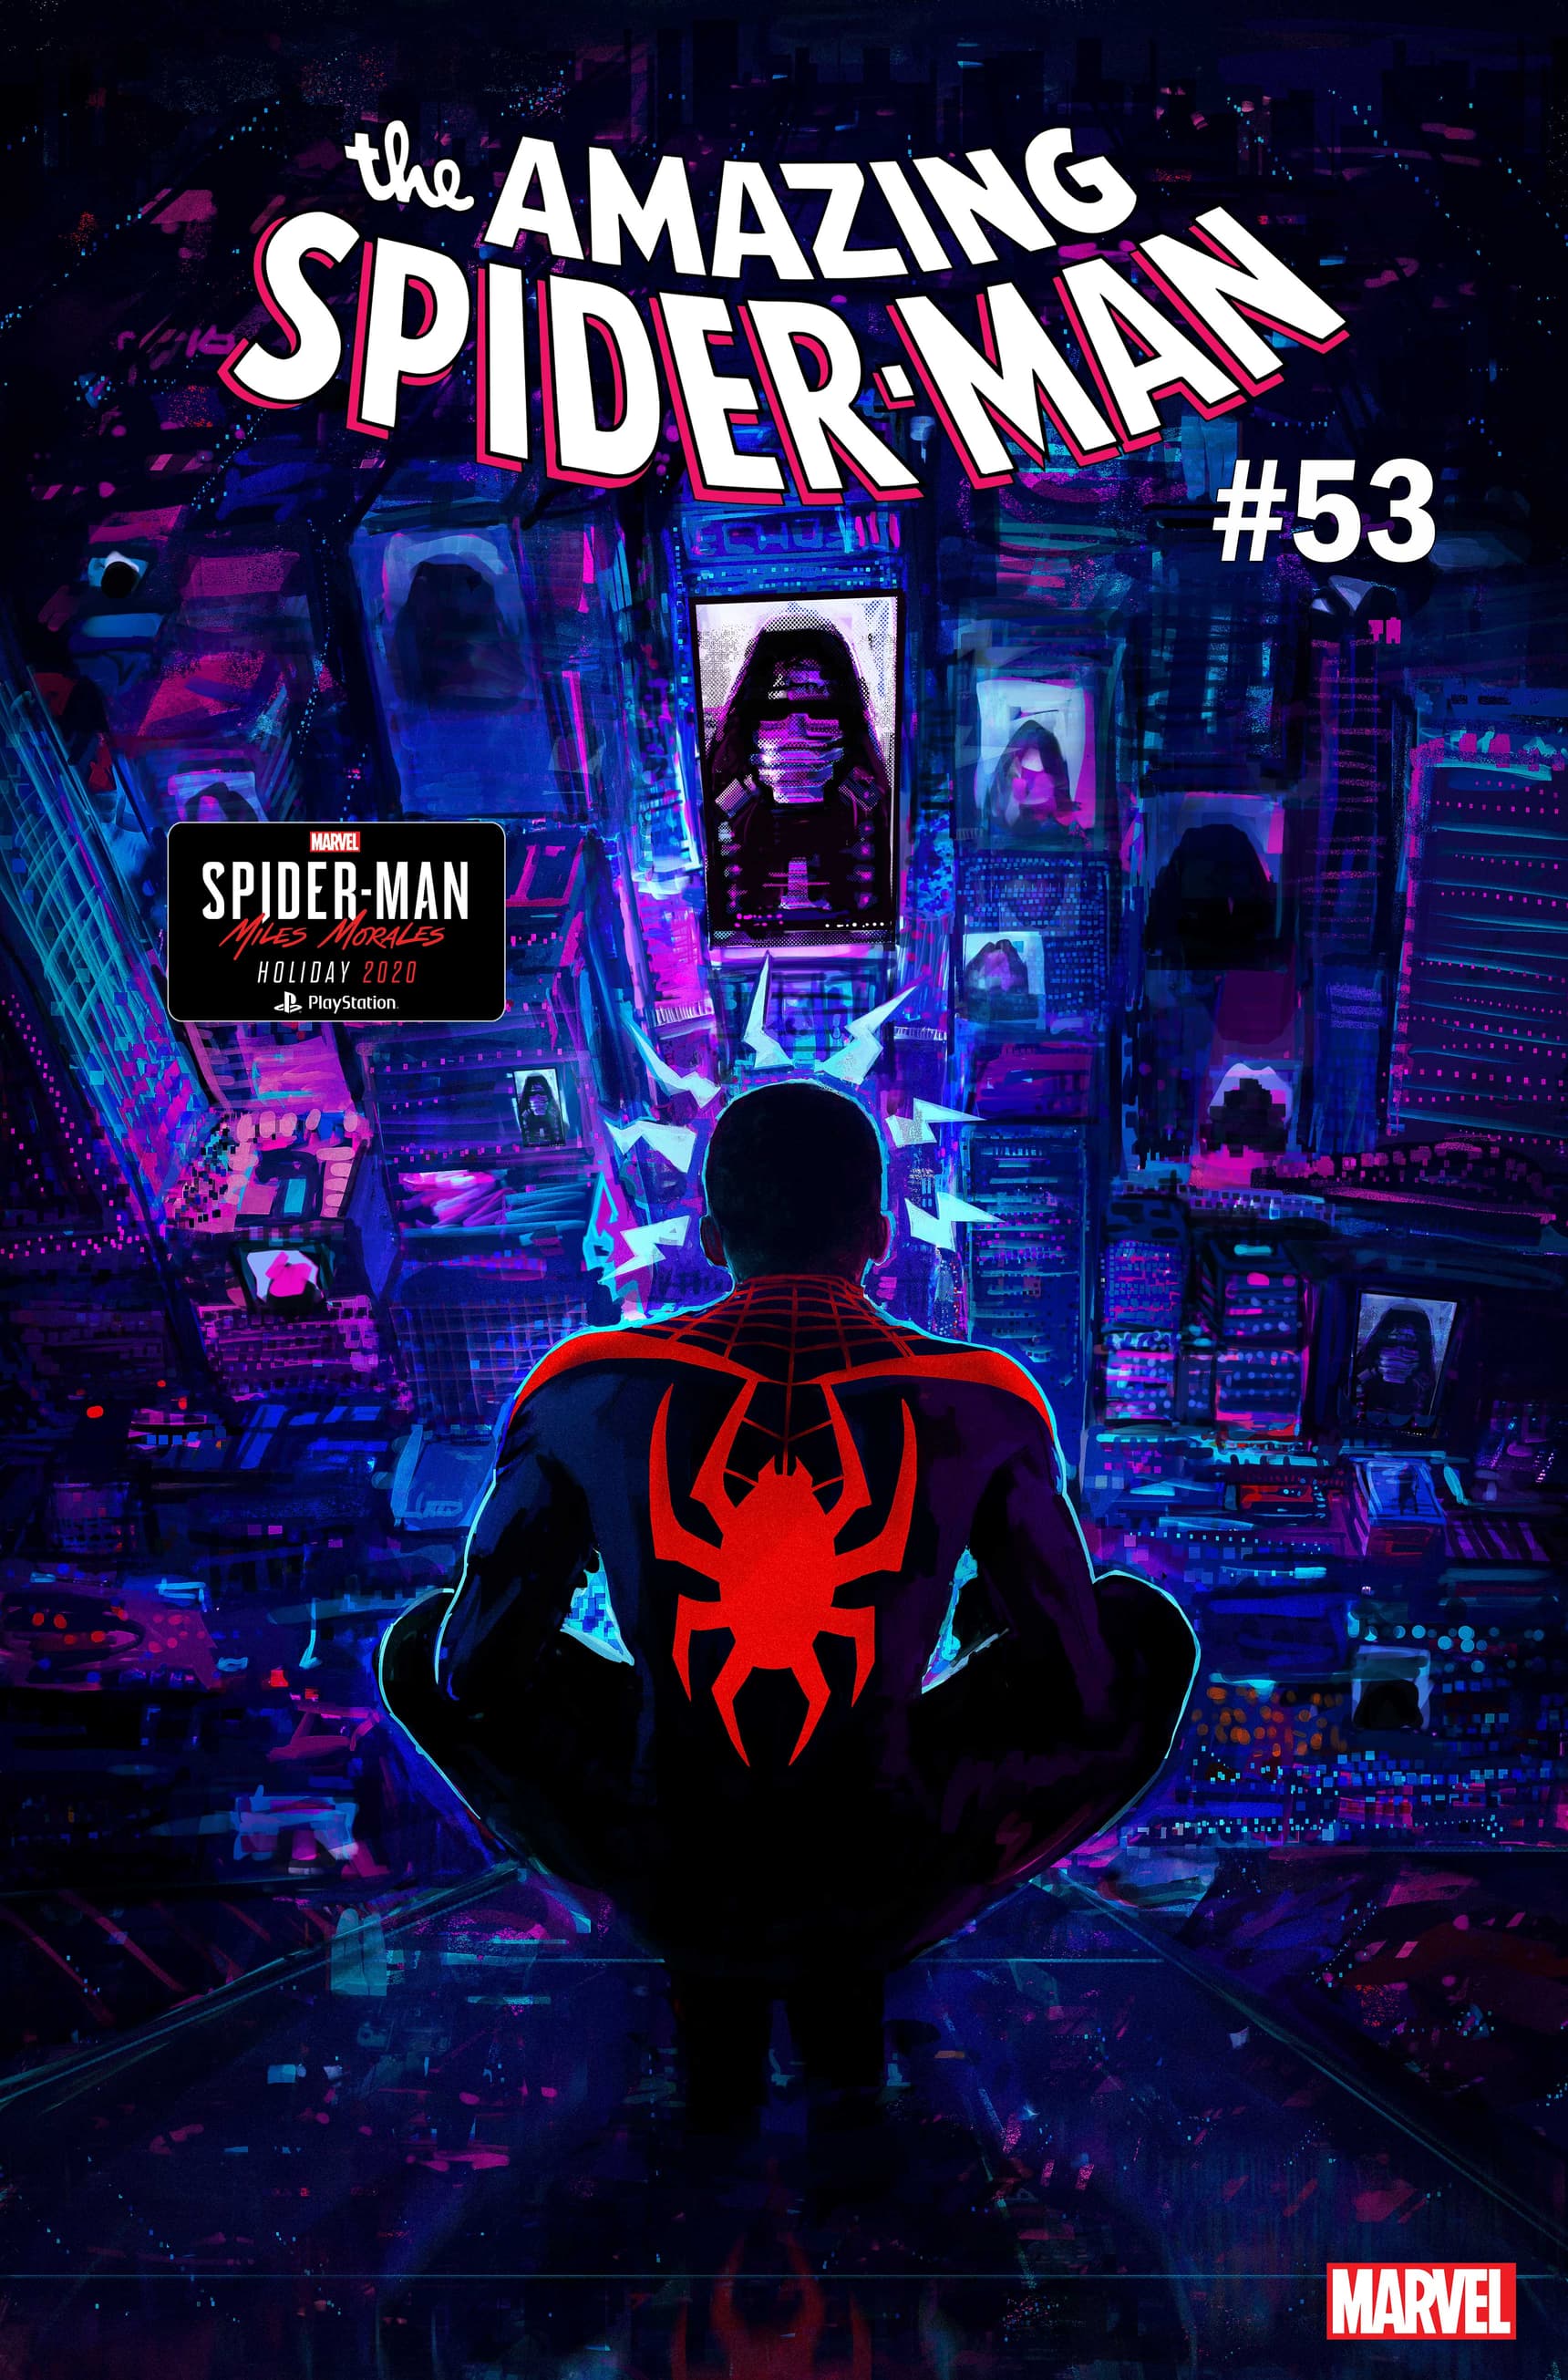 AMAZING SPIDER-MAN #53.LR cover by Insomniac Games art director Jason Hickey